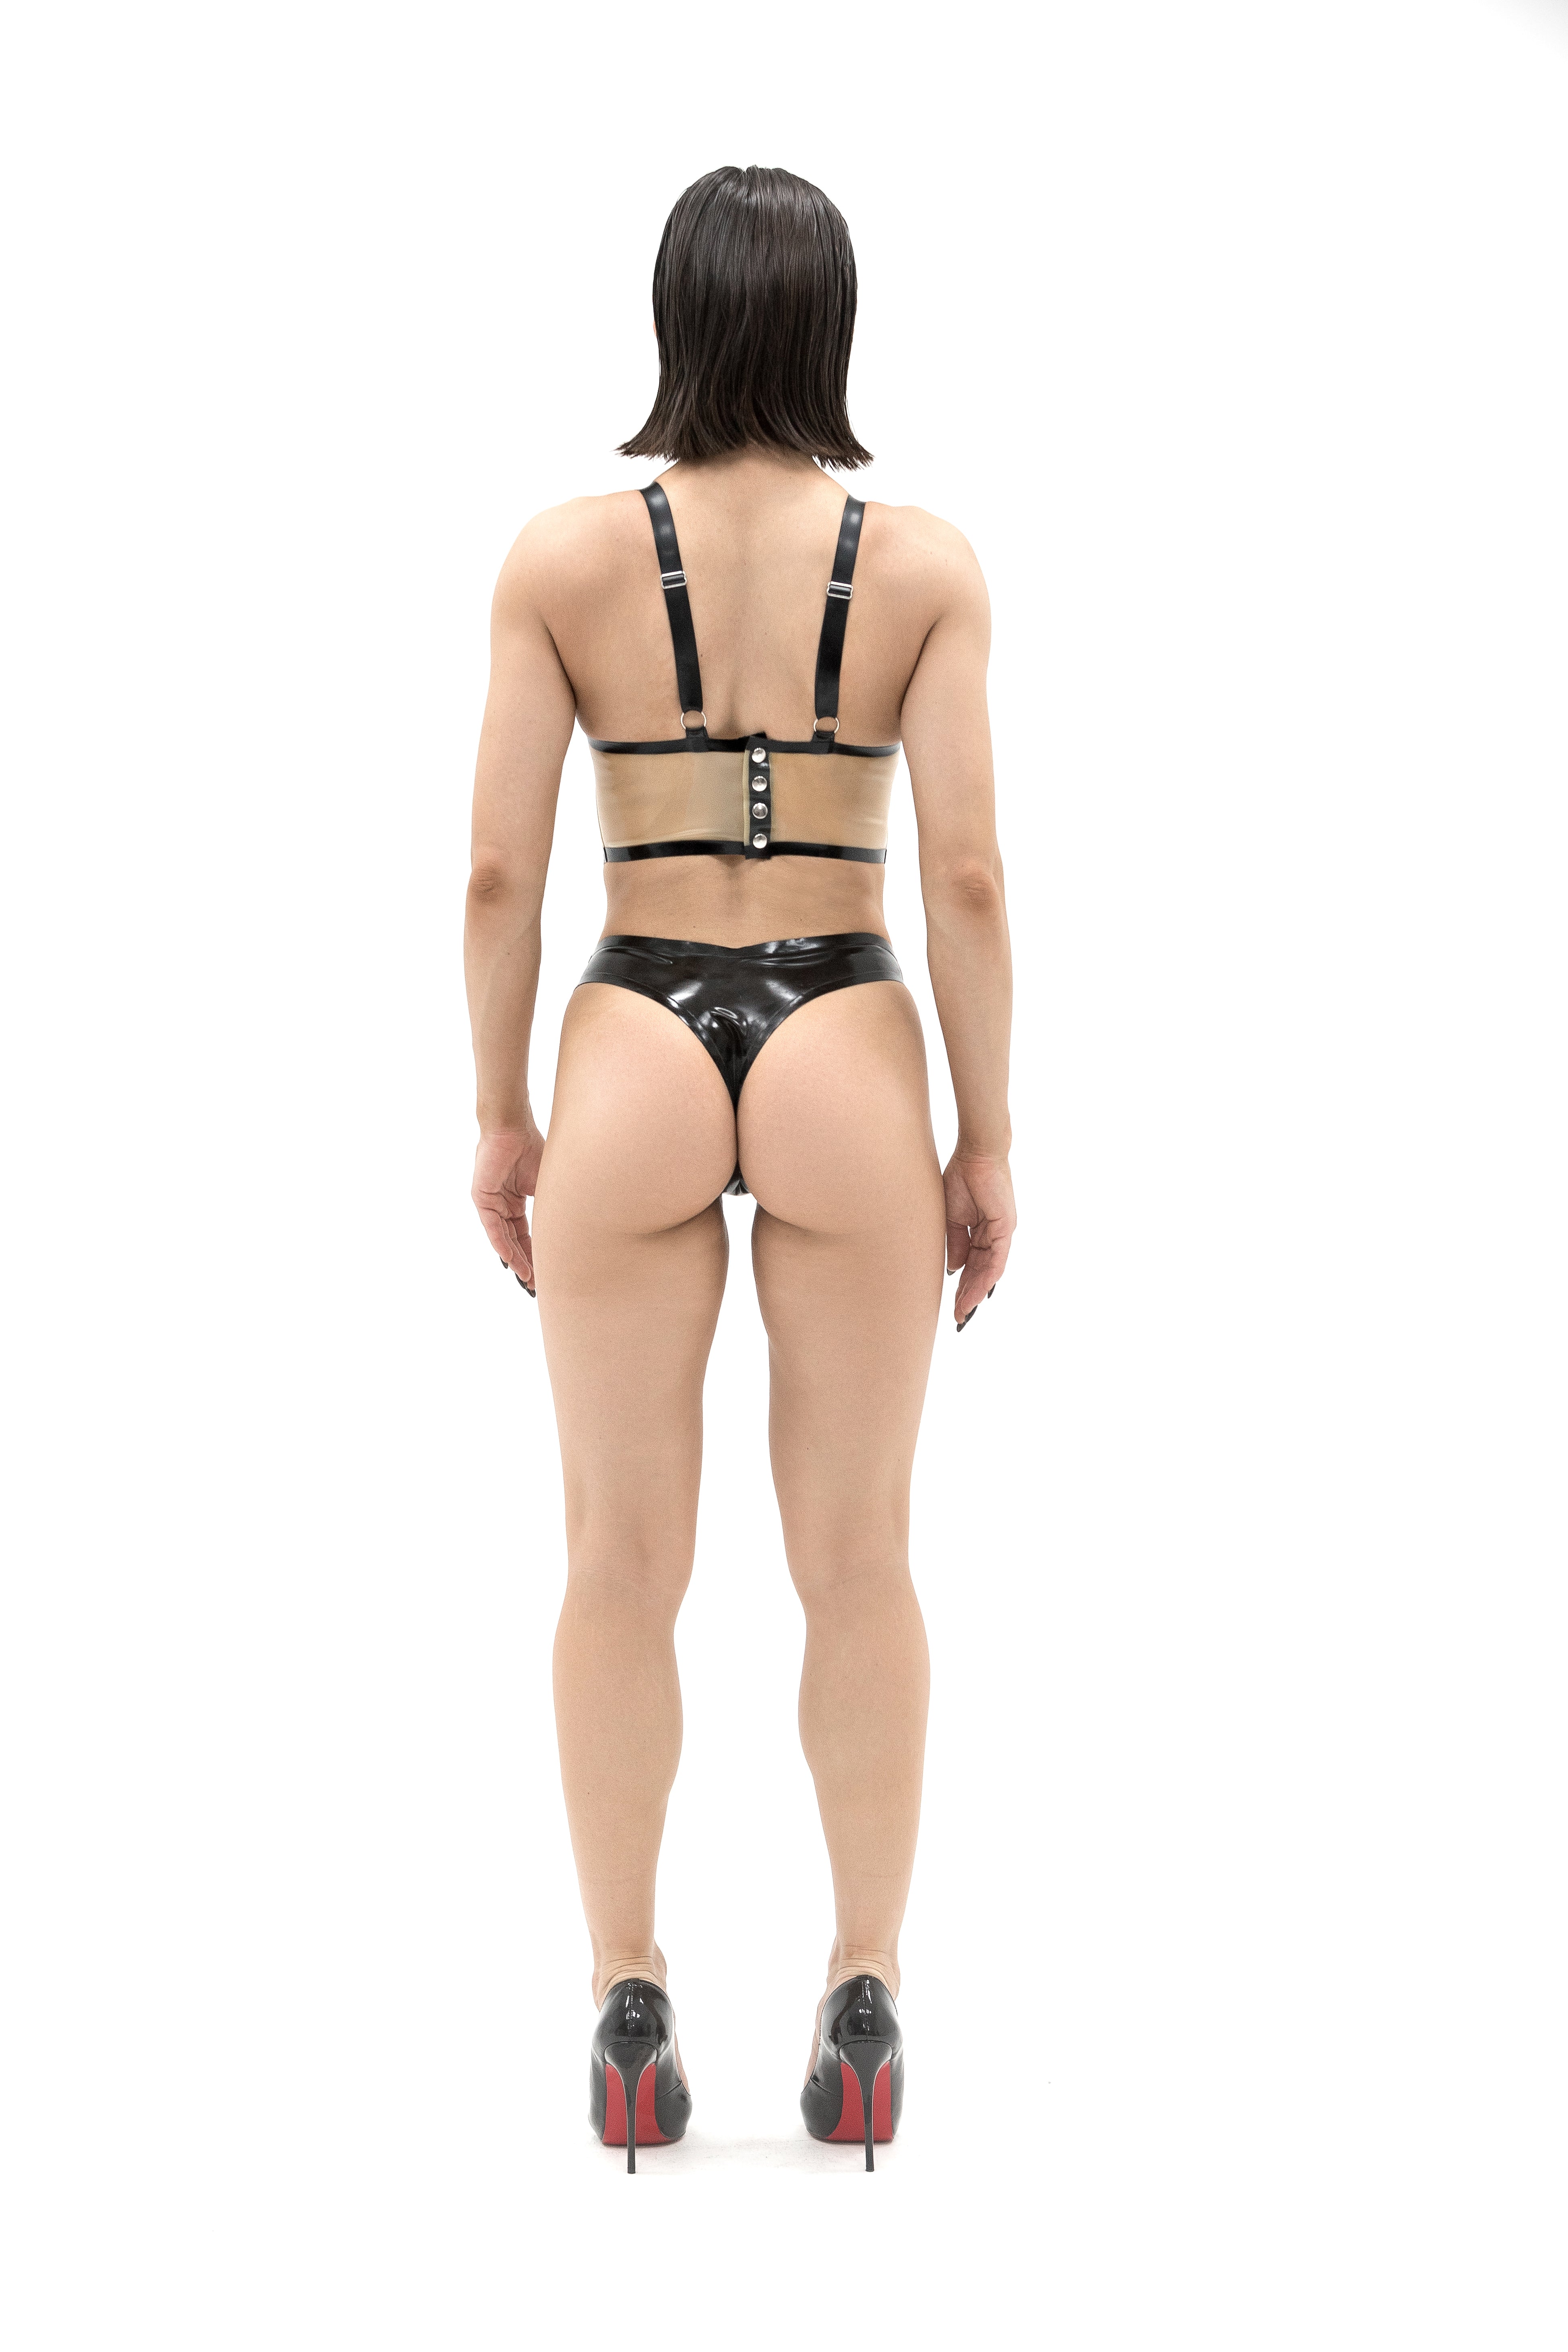 BOHEMIA Latex Lingerie Set - bra and thong black